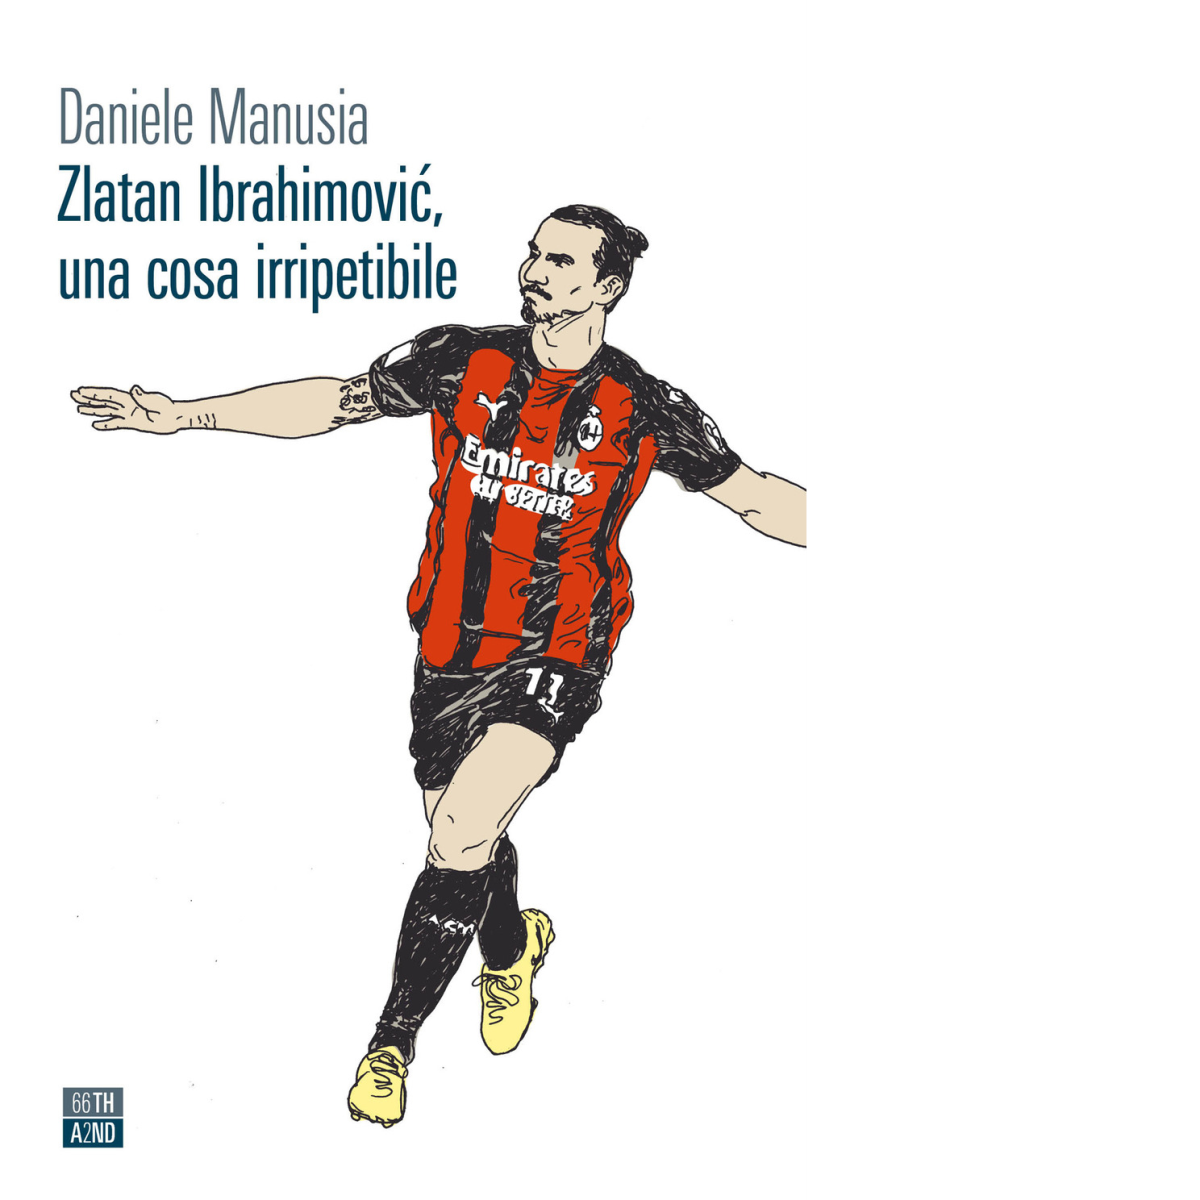 Zlatan Ibrahimovic, una cosa irripetibile di Daniele Manusia,  2021,  66th And 2